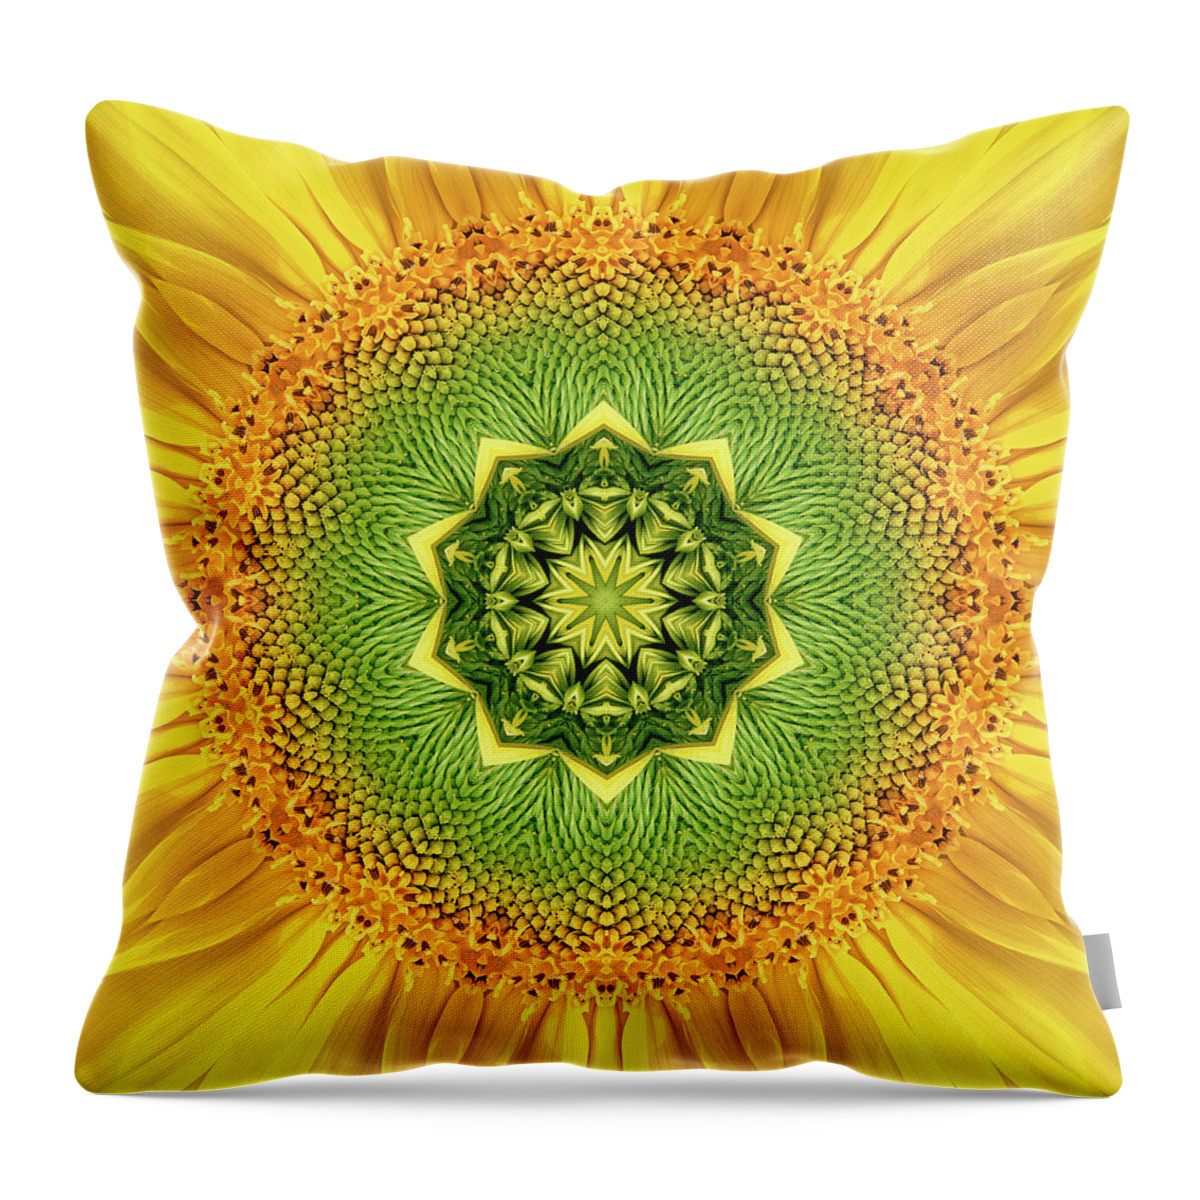 Yellow Throw Pillow featuring the photograph Mandala 7 by Steve Satushek